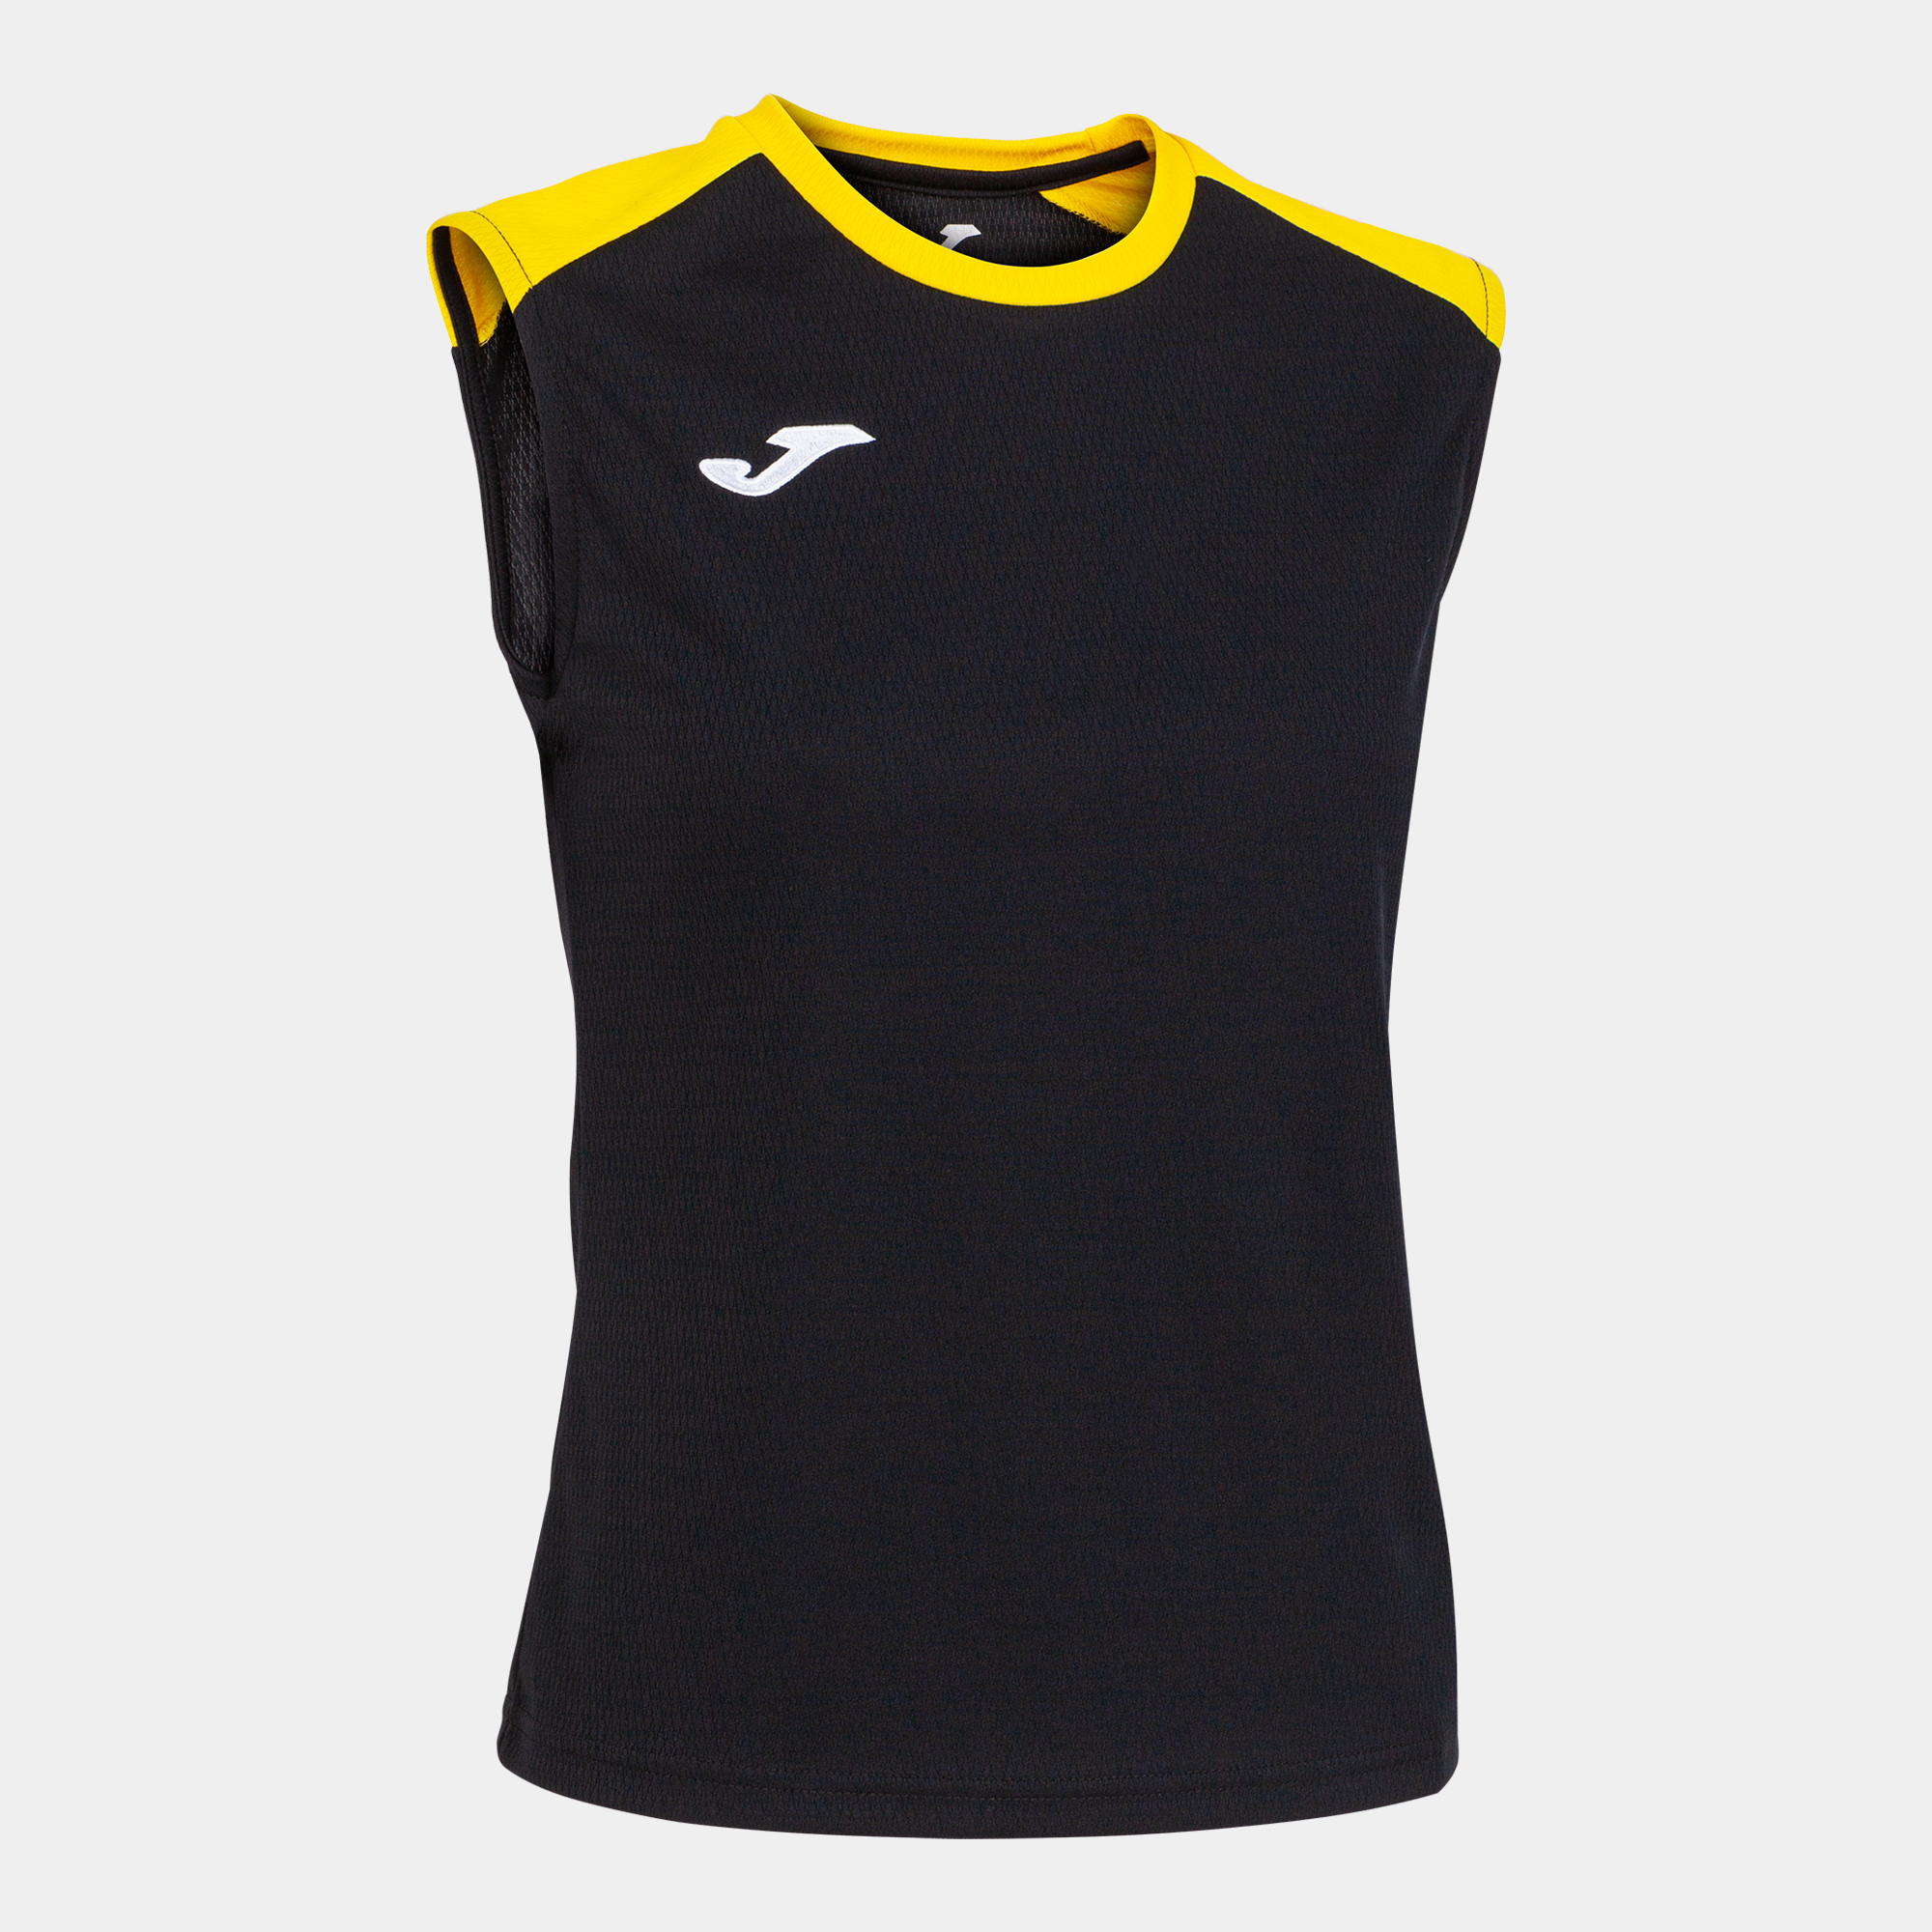 Camiseta Tirantes Joma Eco Championship Negro Amarillo